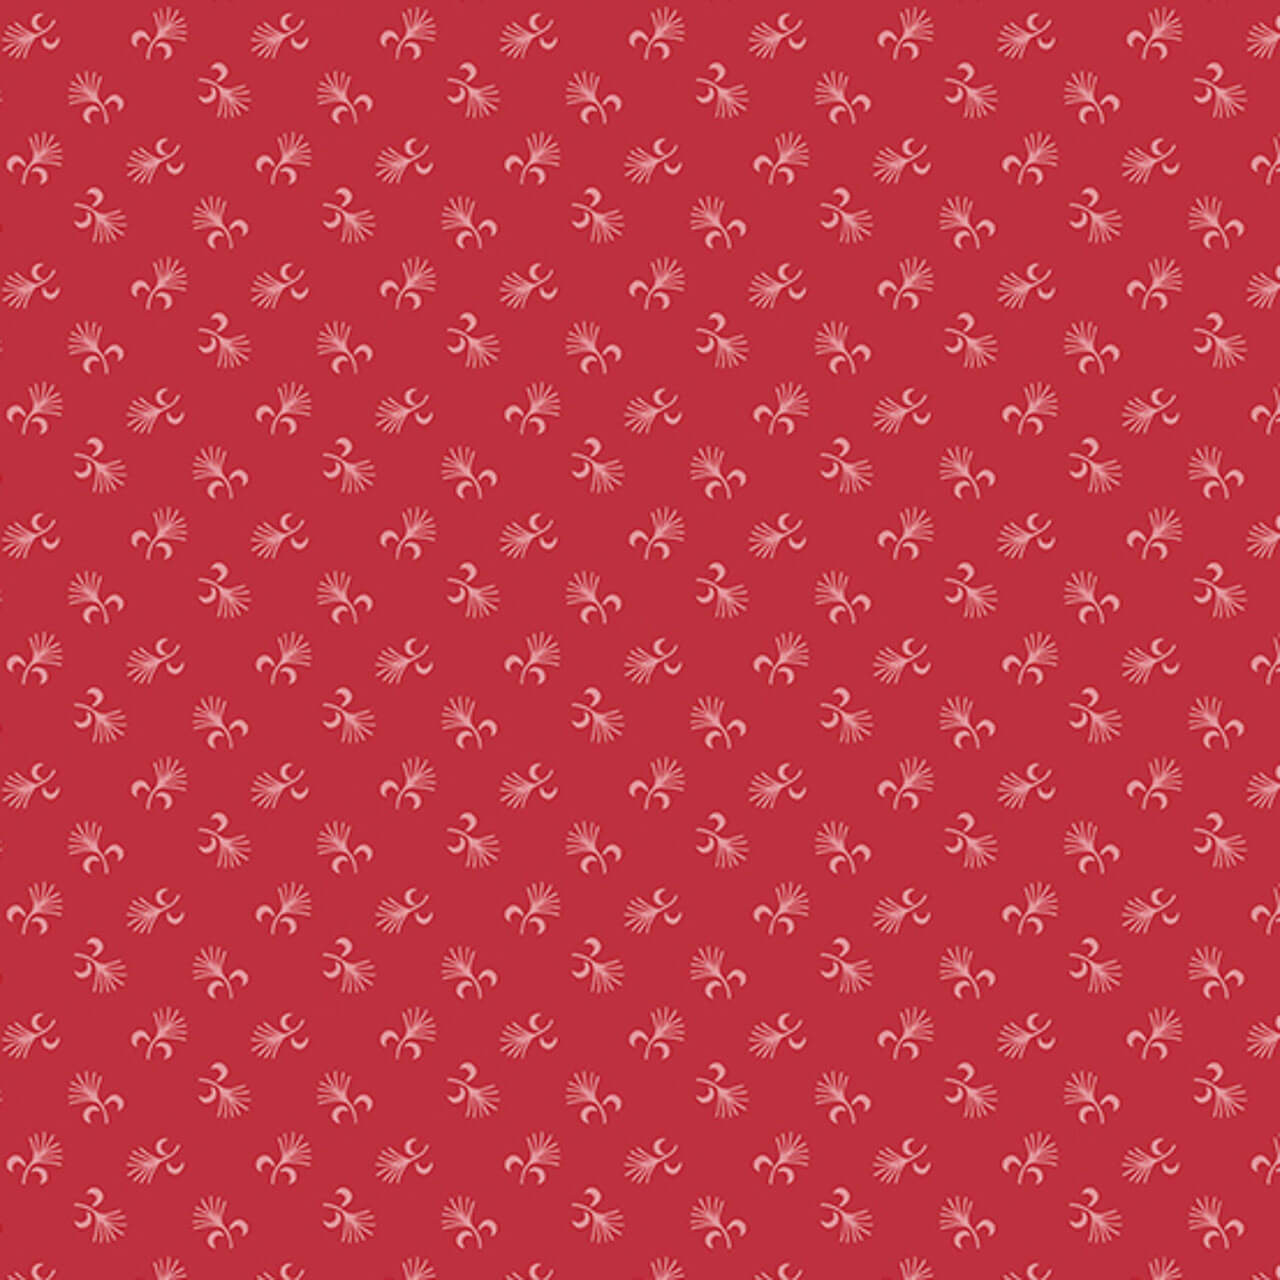 Andover's Dandelion Fluff in Crimson with delicate ditsy prints on cotton